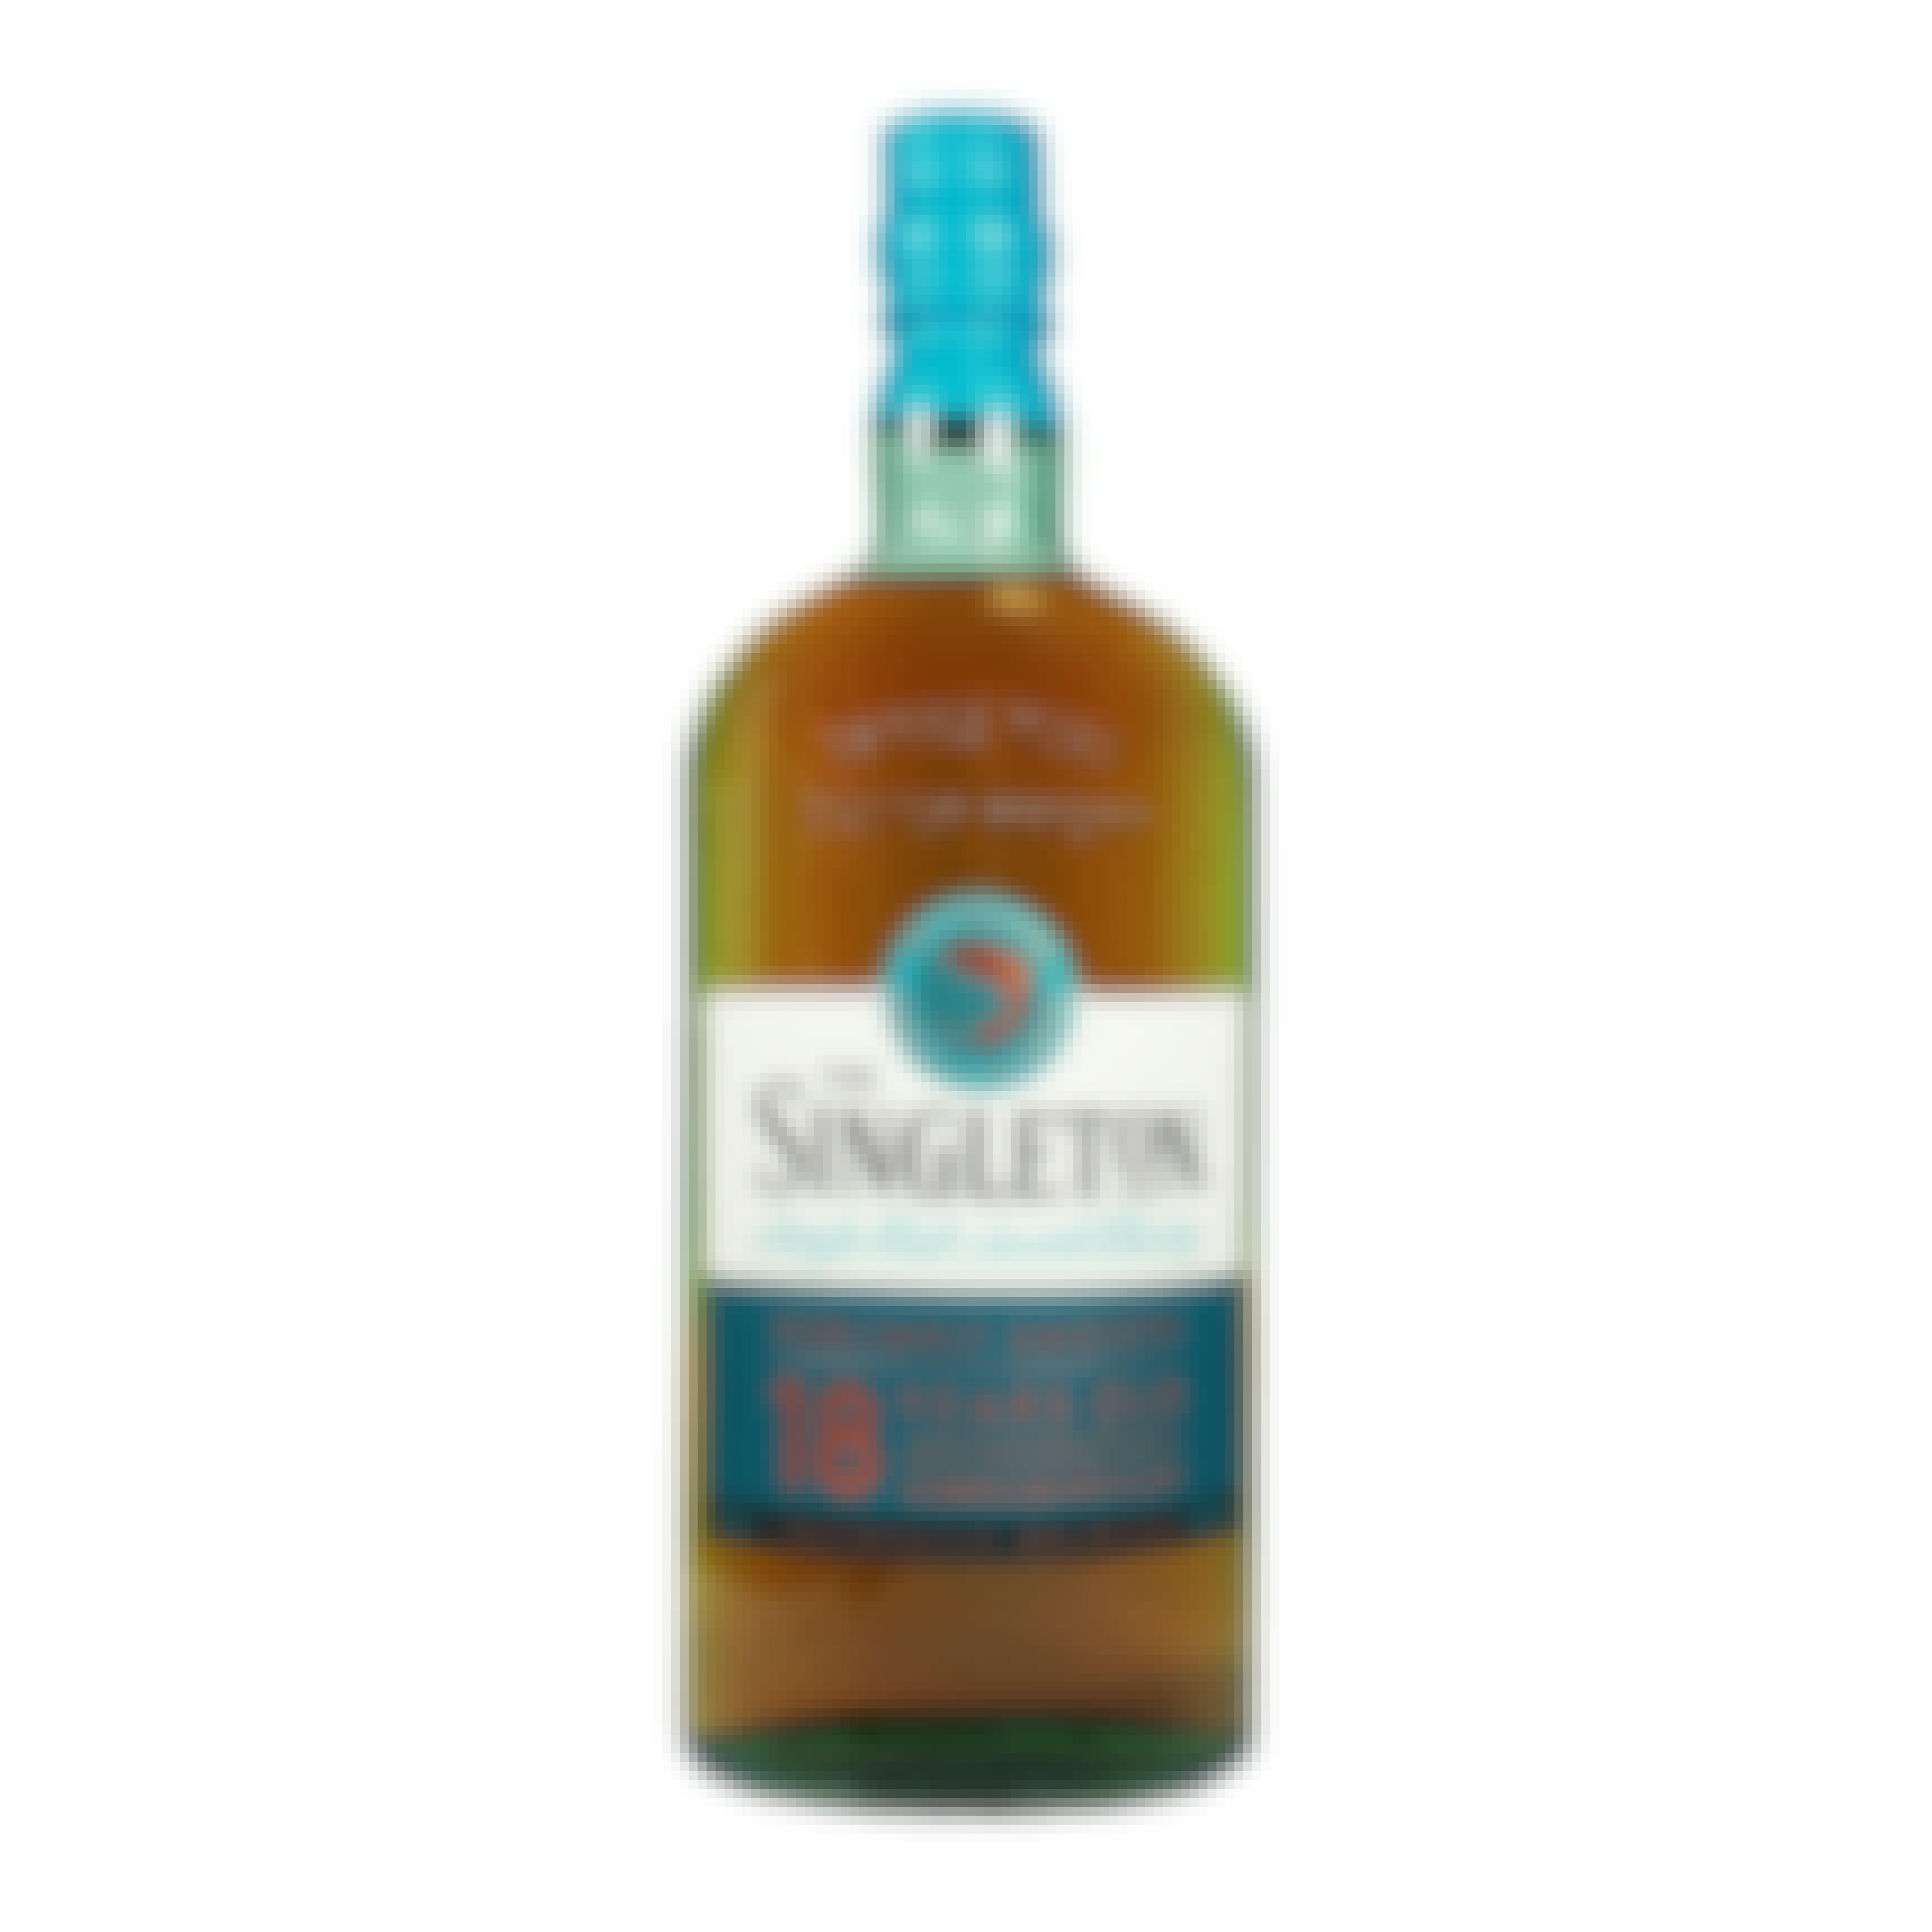 The Singleton Single Malt Scotch 18 year old 750ml